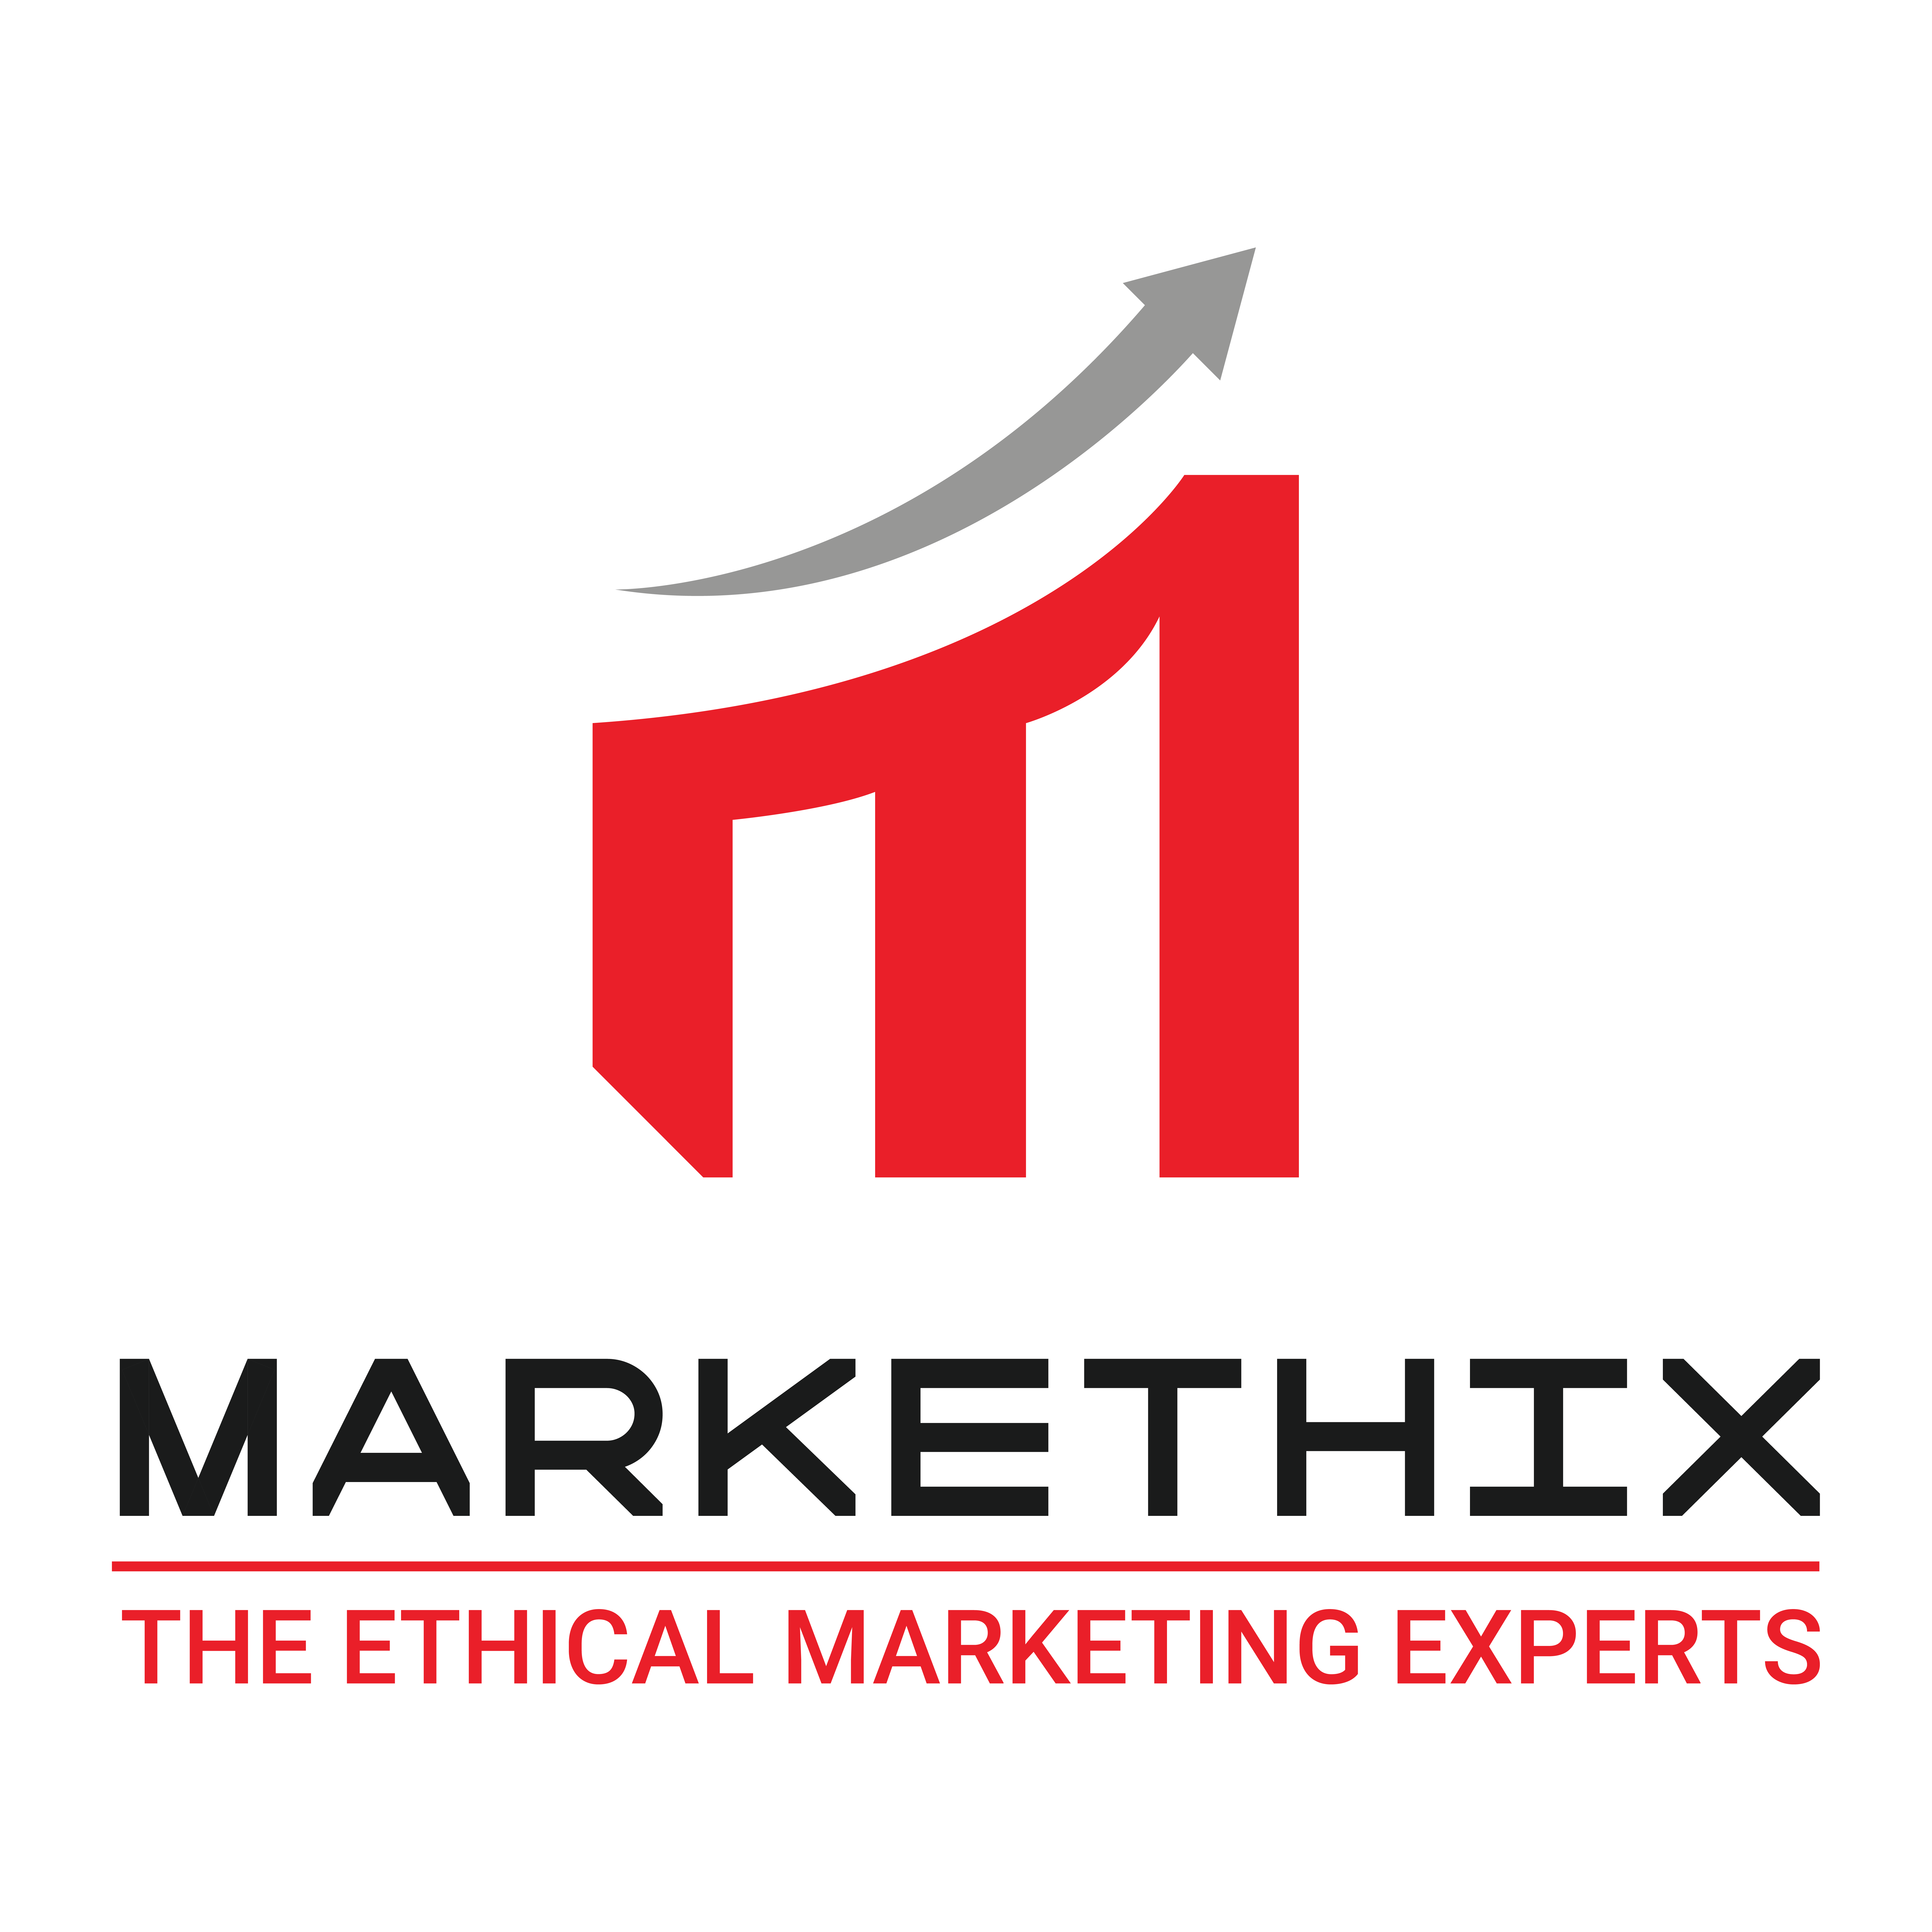 Markethix cover